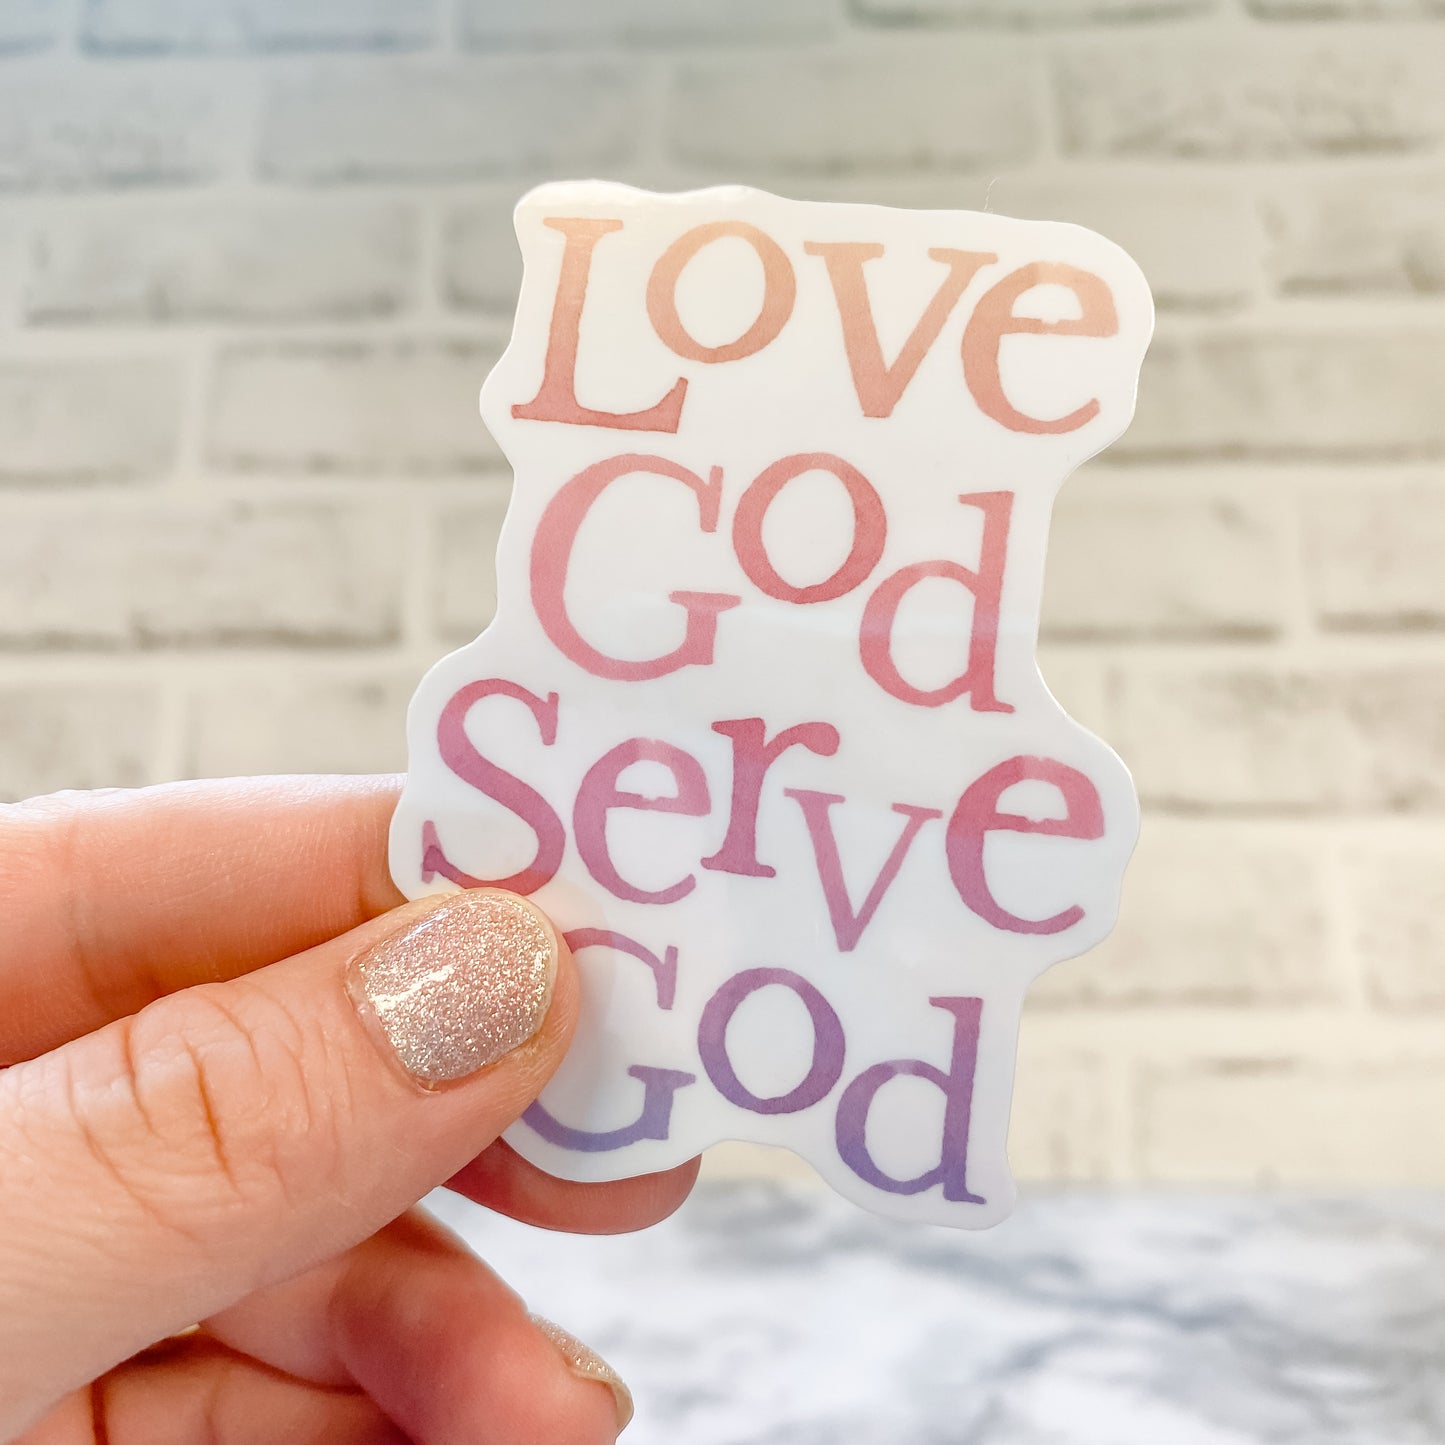 Sticker - Love God Serve God